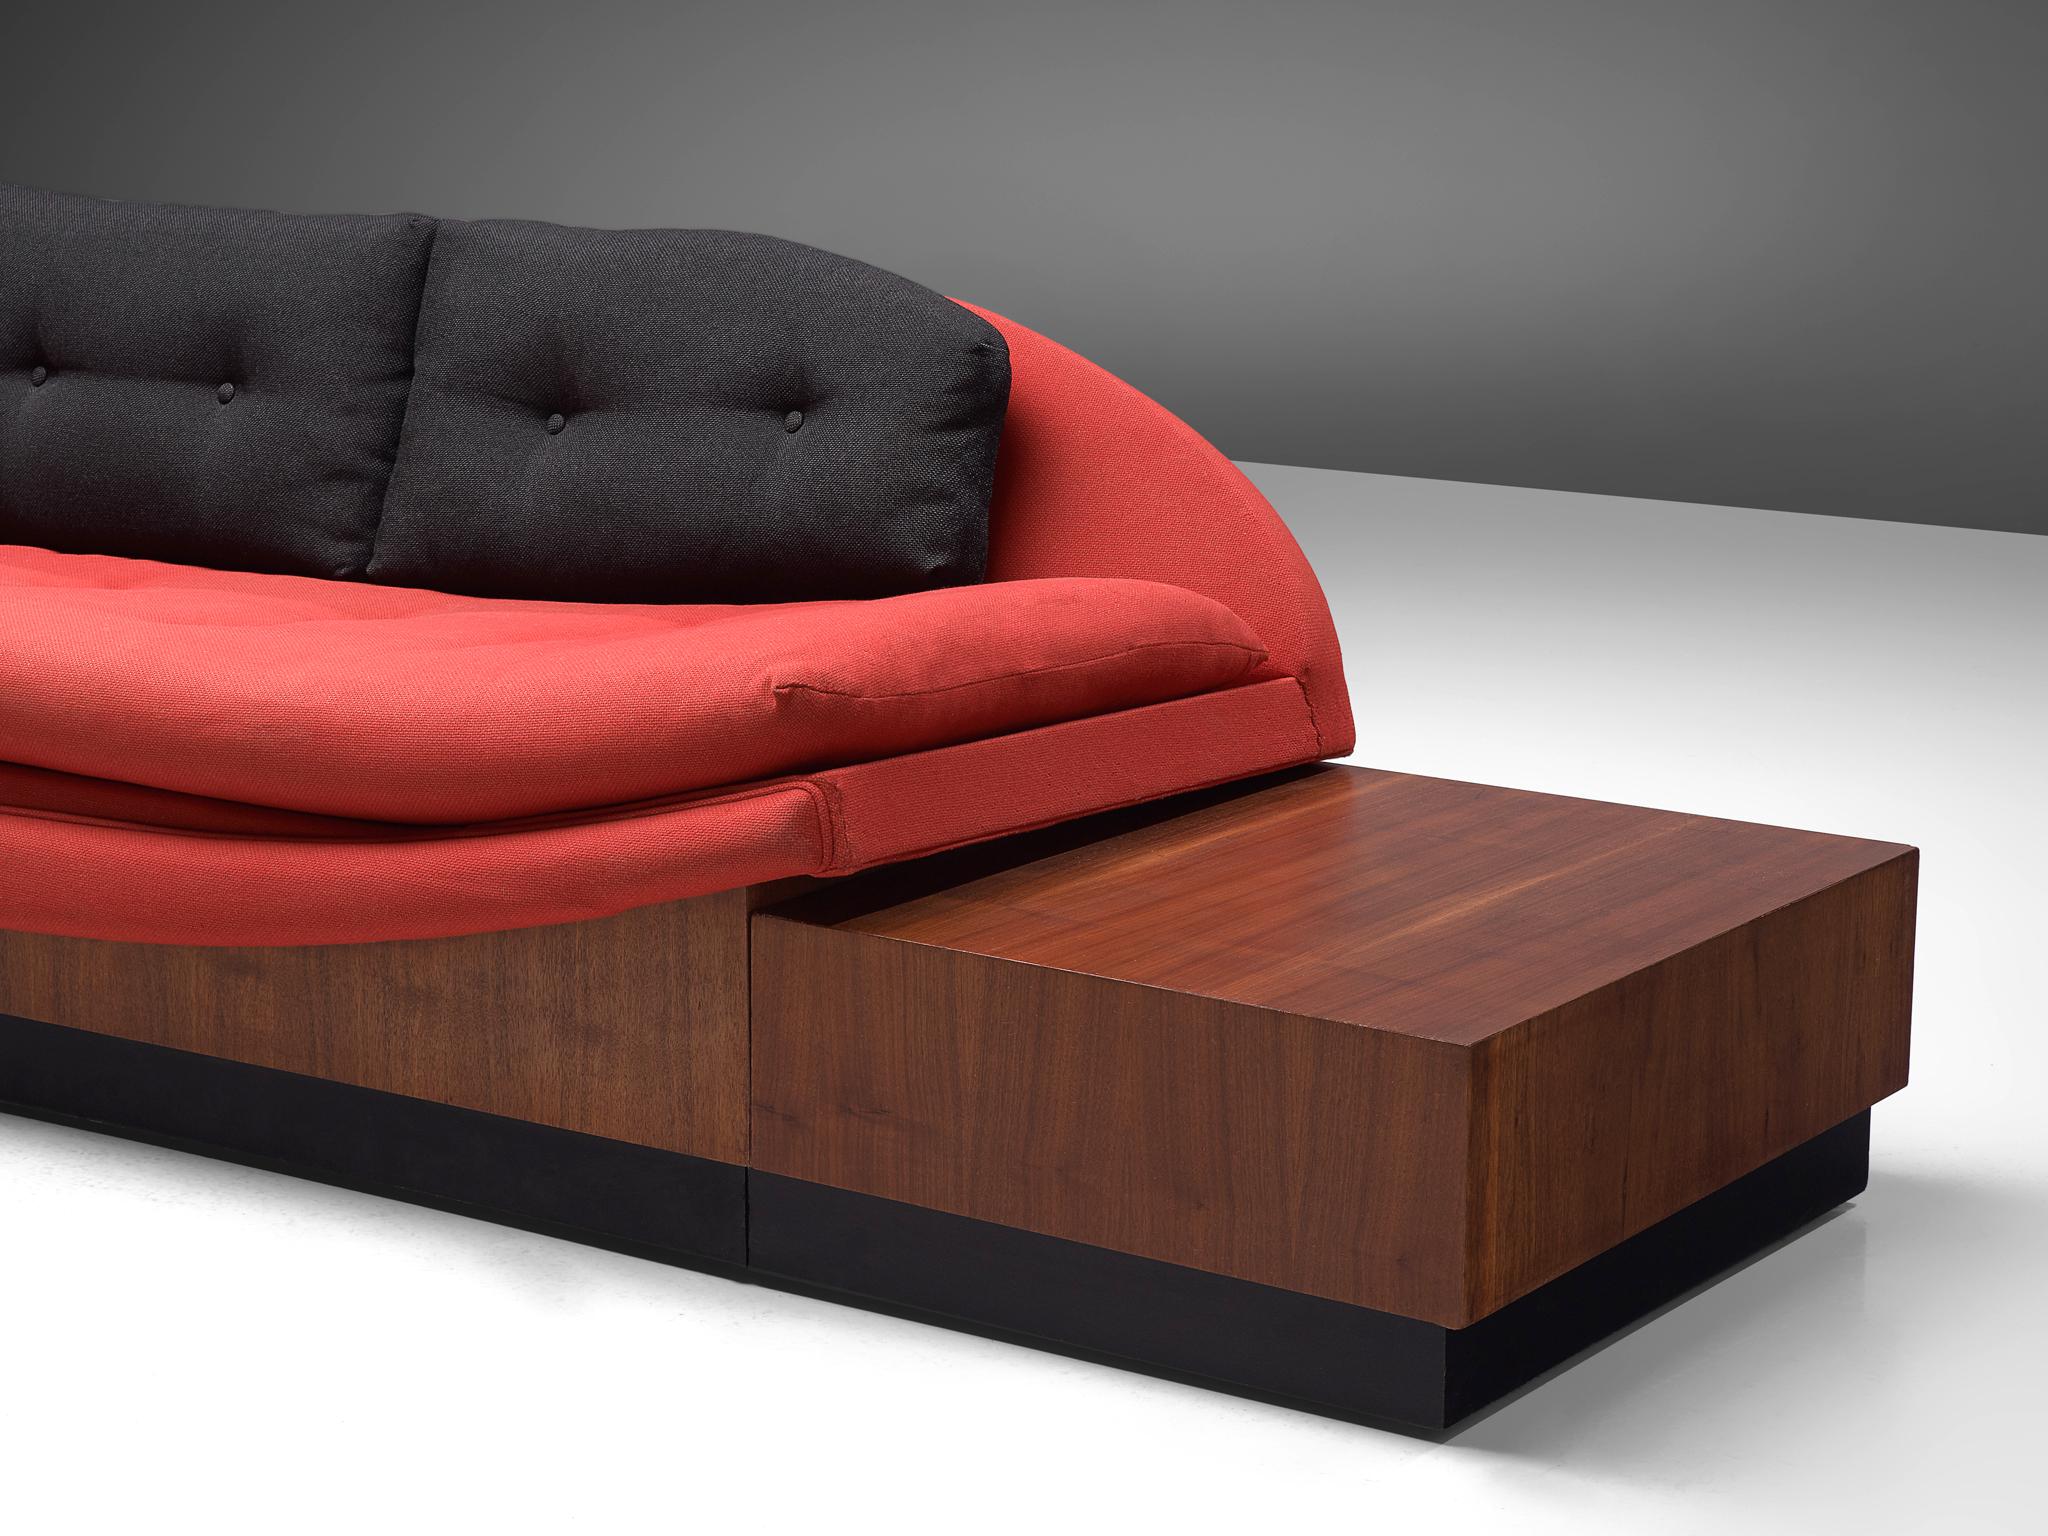 Fabric Adrian Pearsall 'Platform Gondola' Sofa with Side Tables